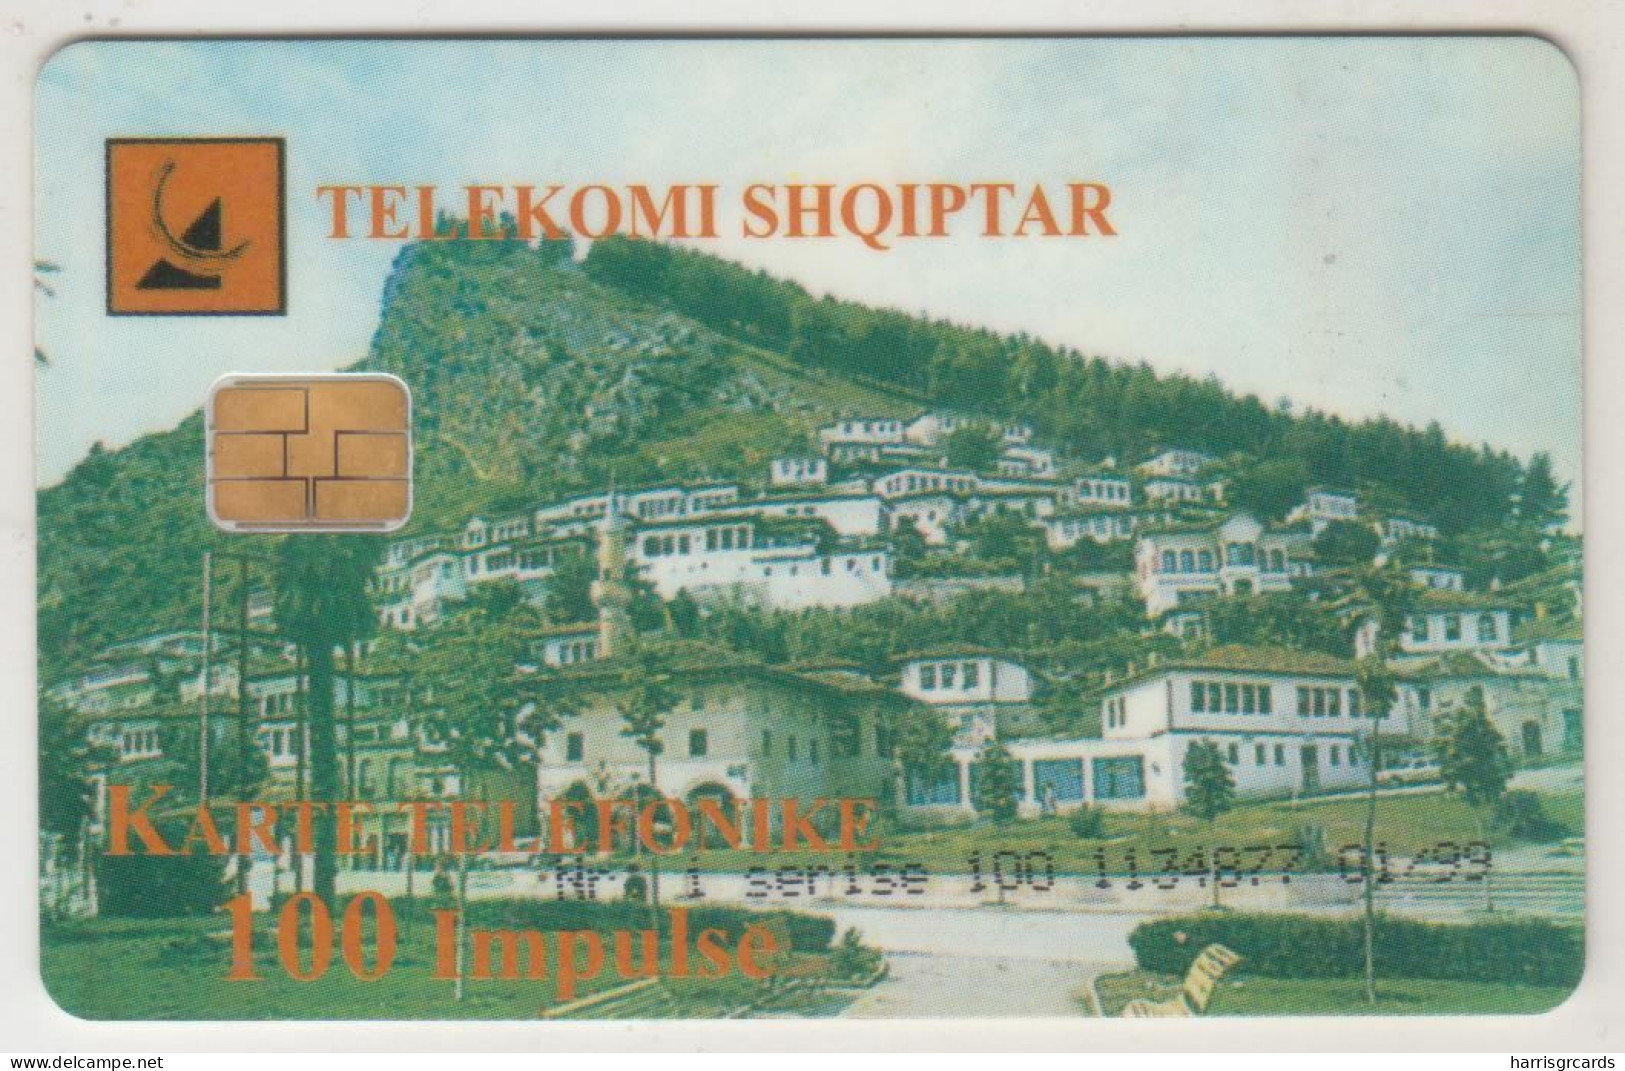 ALBANIA - Berat Unesco Traditional Heritage Town ,CN: Black, 01/99, Tirage 90.000, 100 U, Used - Albanie